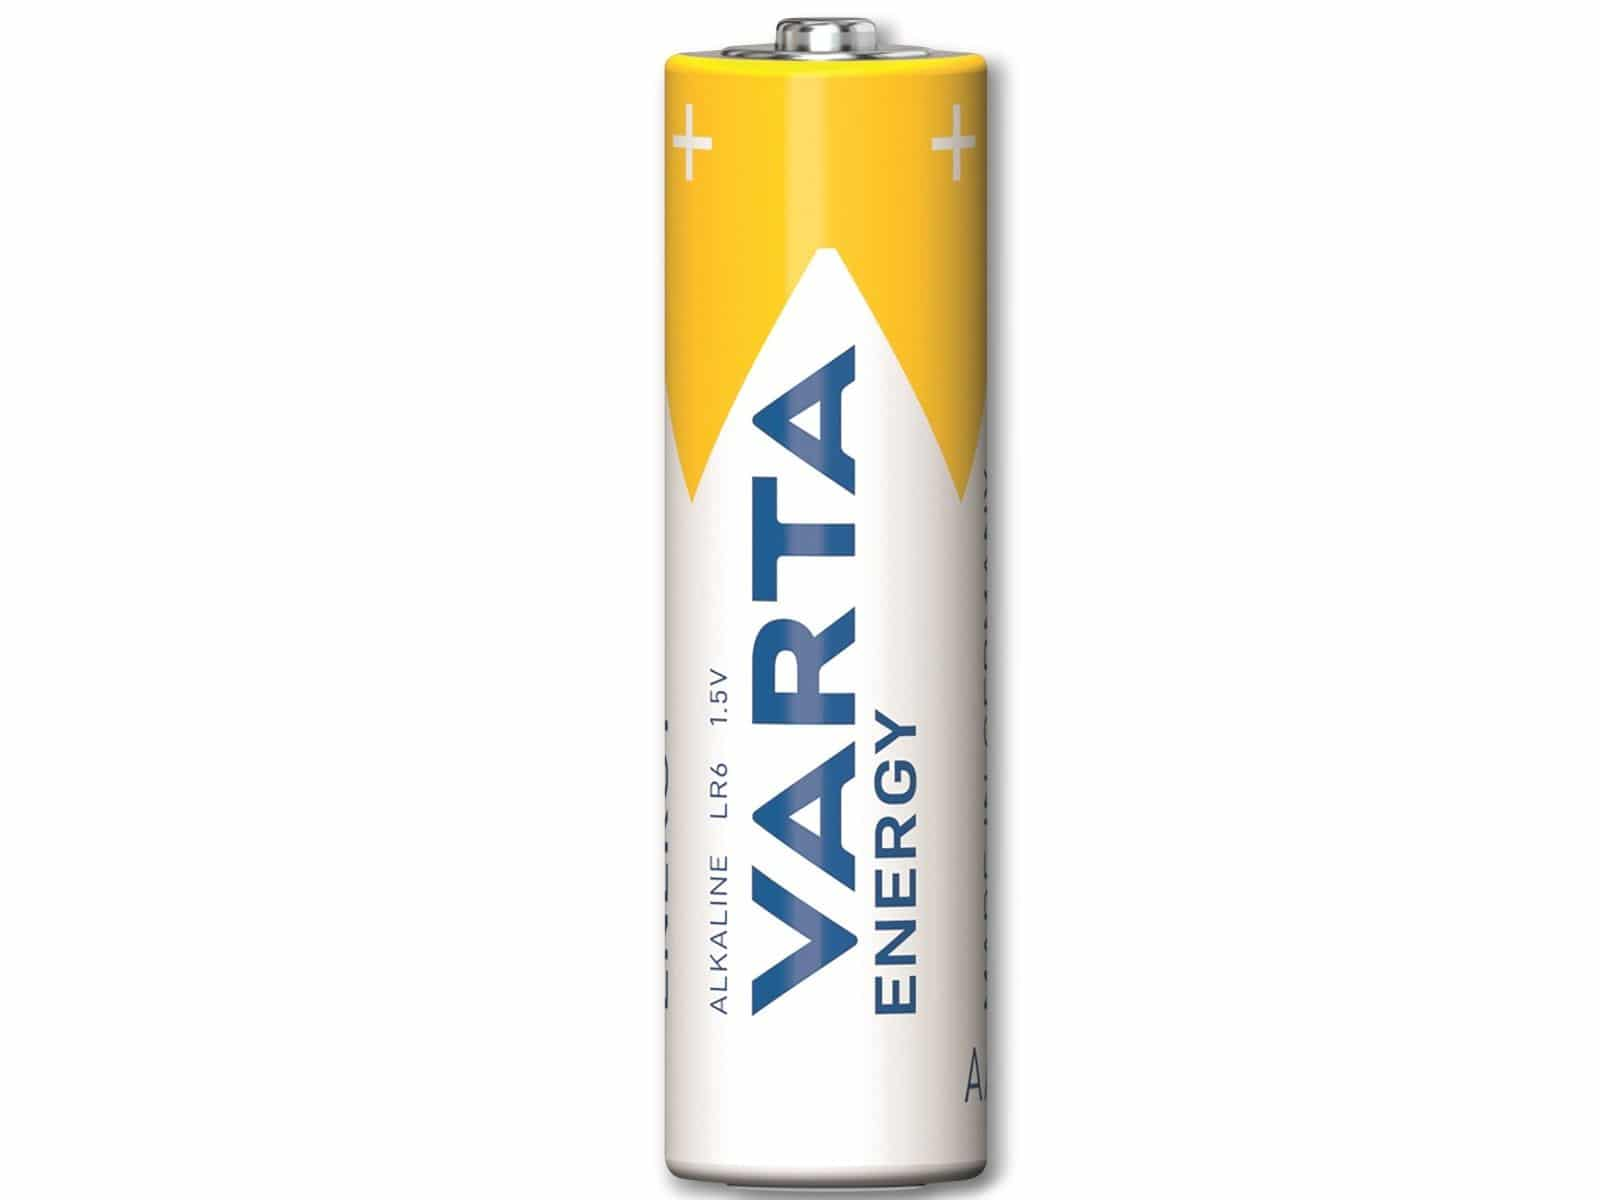 Stück AA, Energy, Batterien LR06, Mignon, Alkaline 1.5V, Alkaline, VARTA Batterie 8